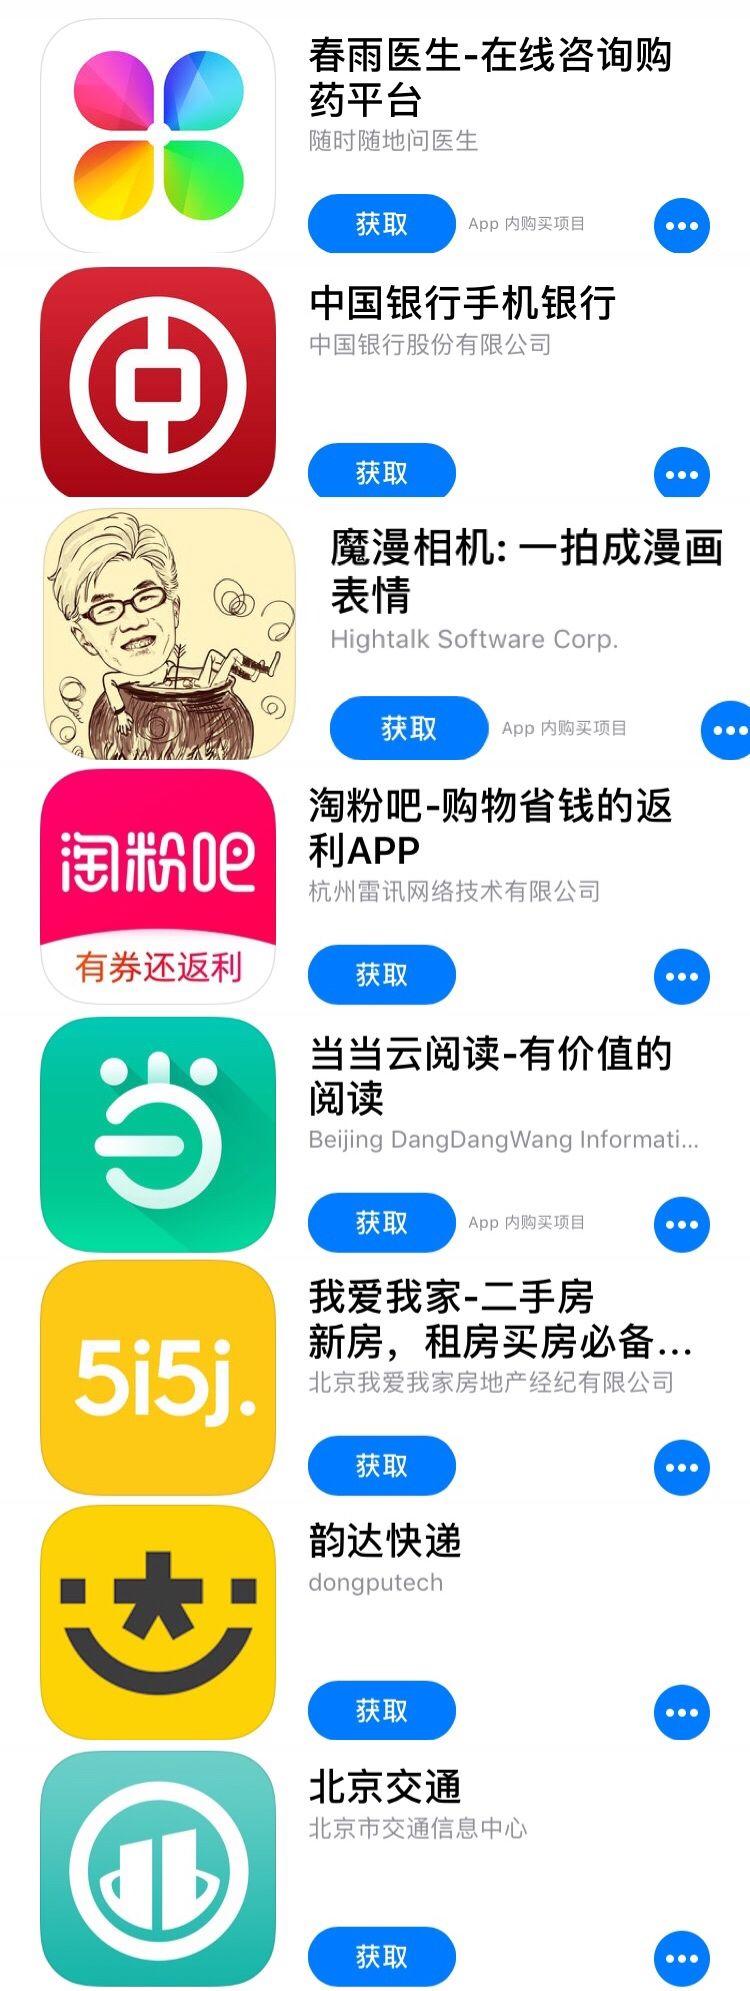 Illegal! 30 Apps Filch User's Secret, including Chinese Tinder!